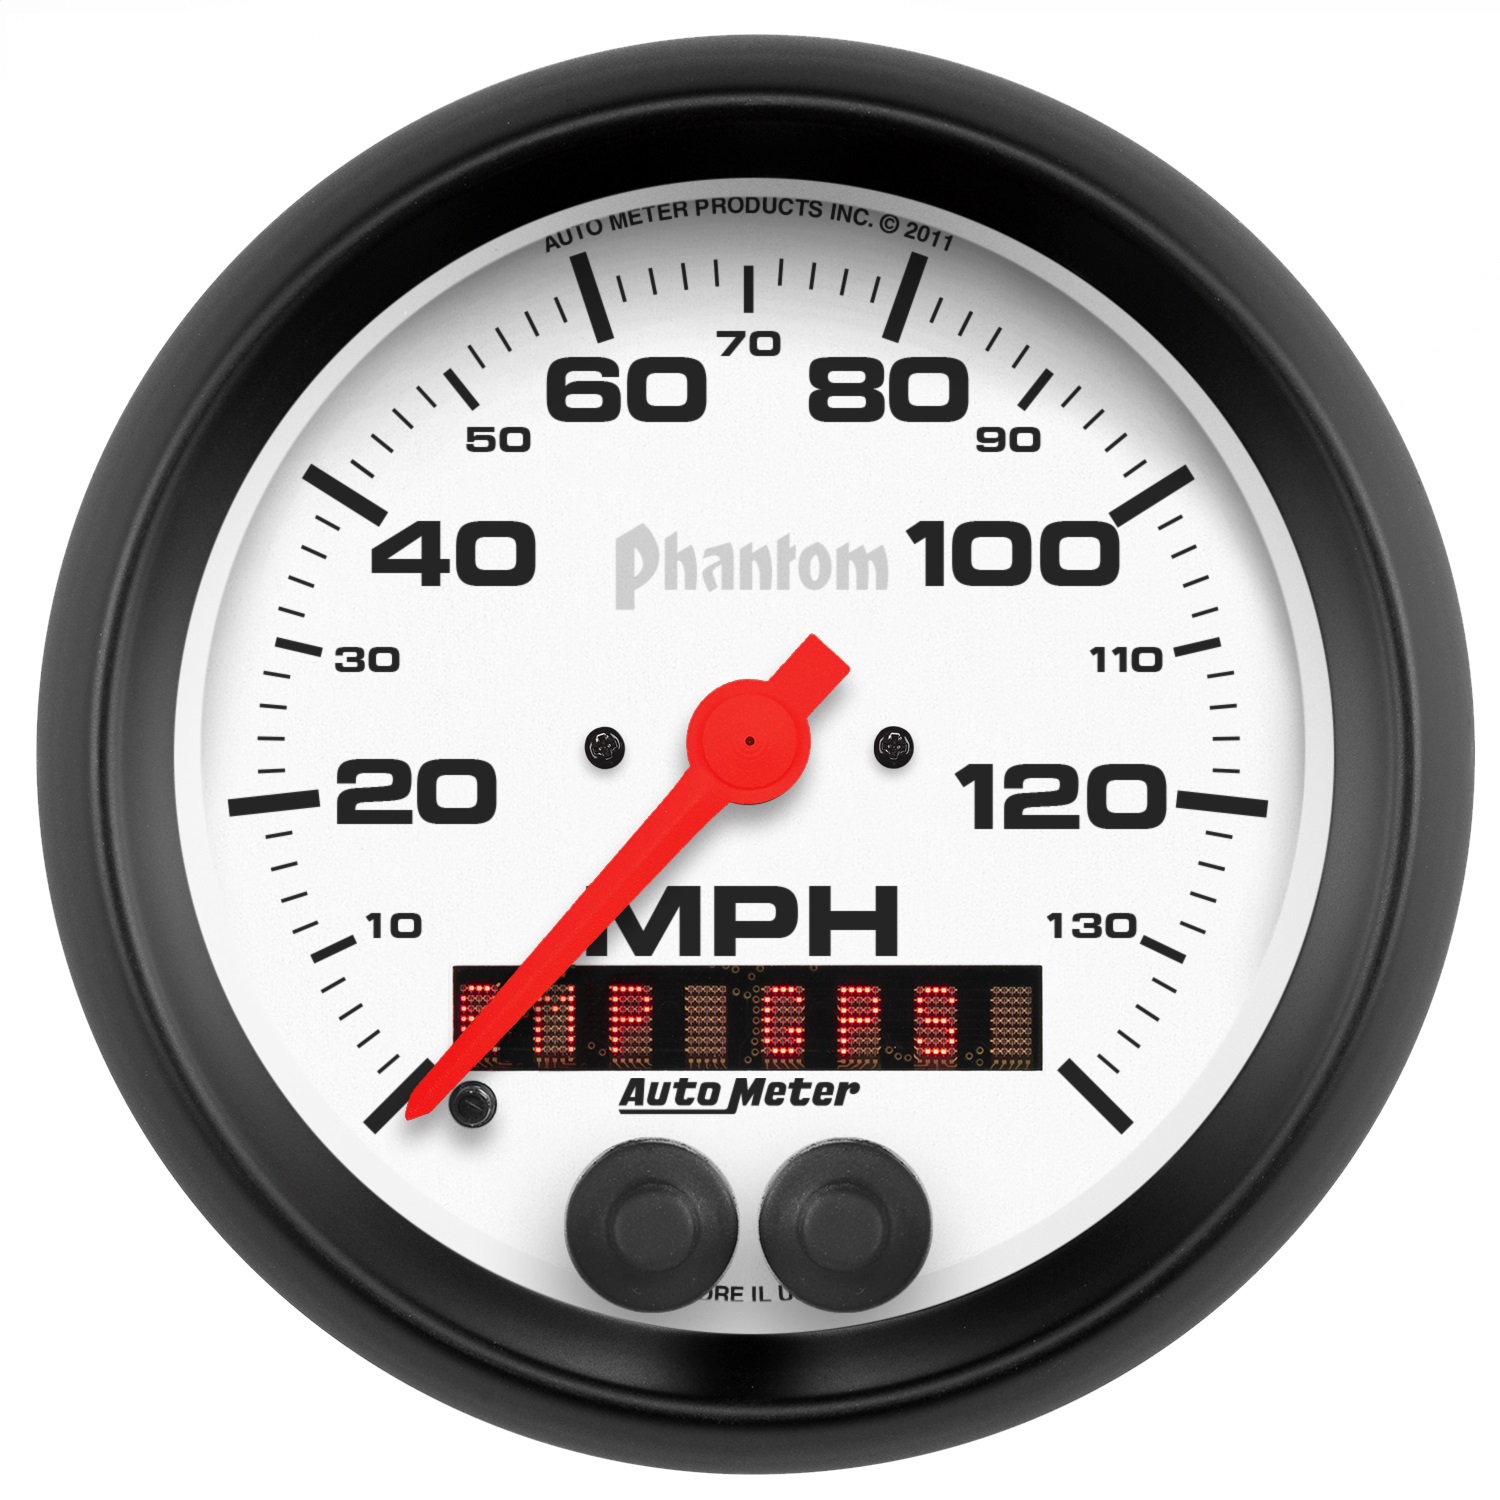 Auto Meter Auto Meter 5880 Phantom; GPS Speedometer